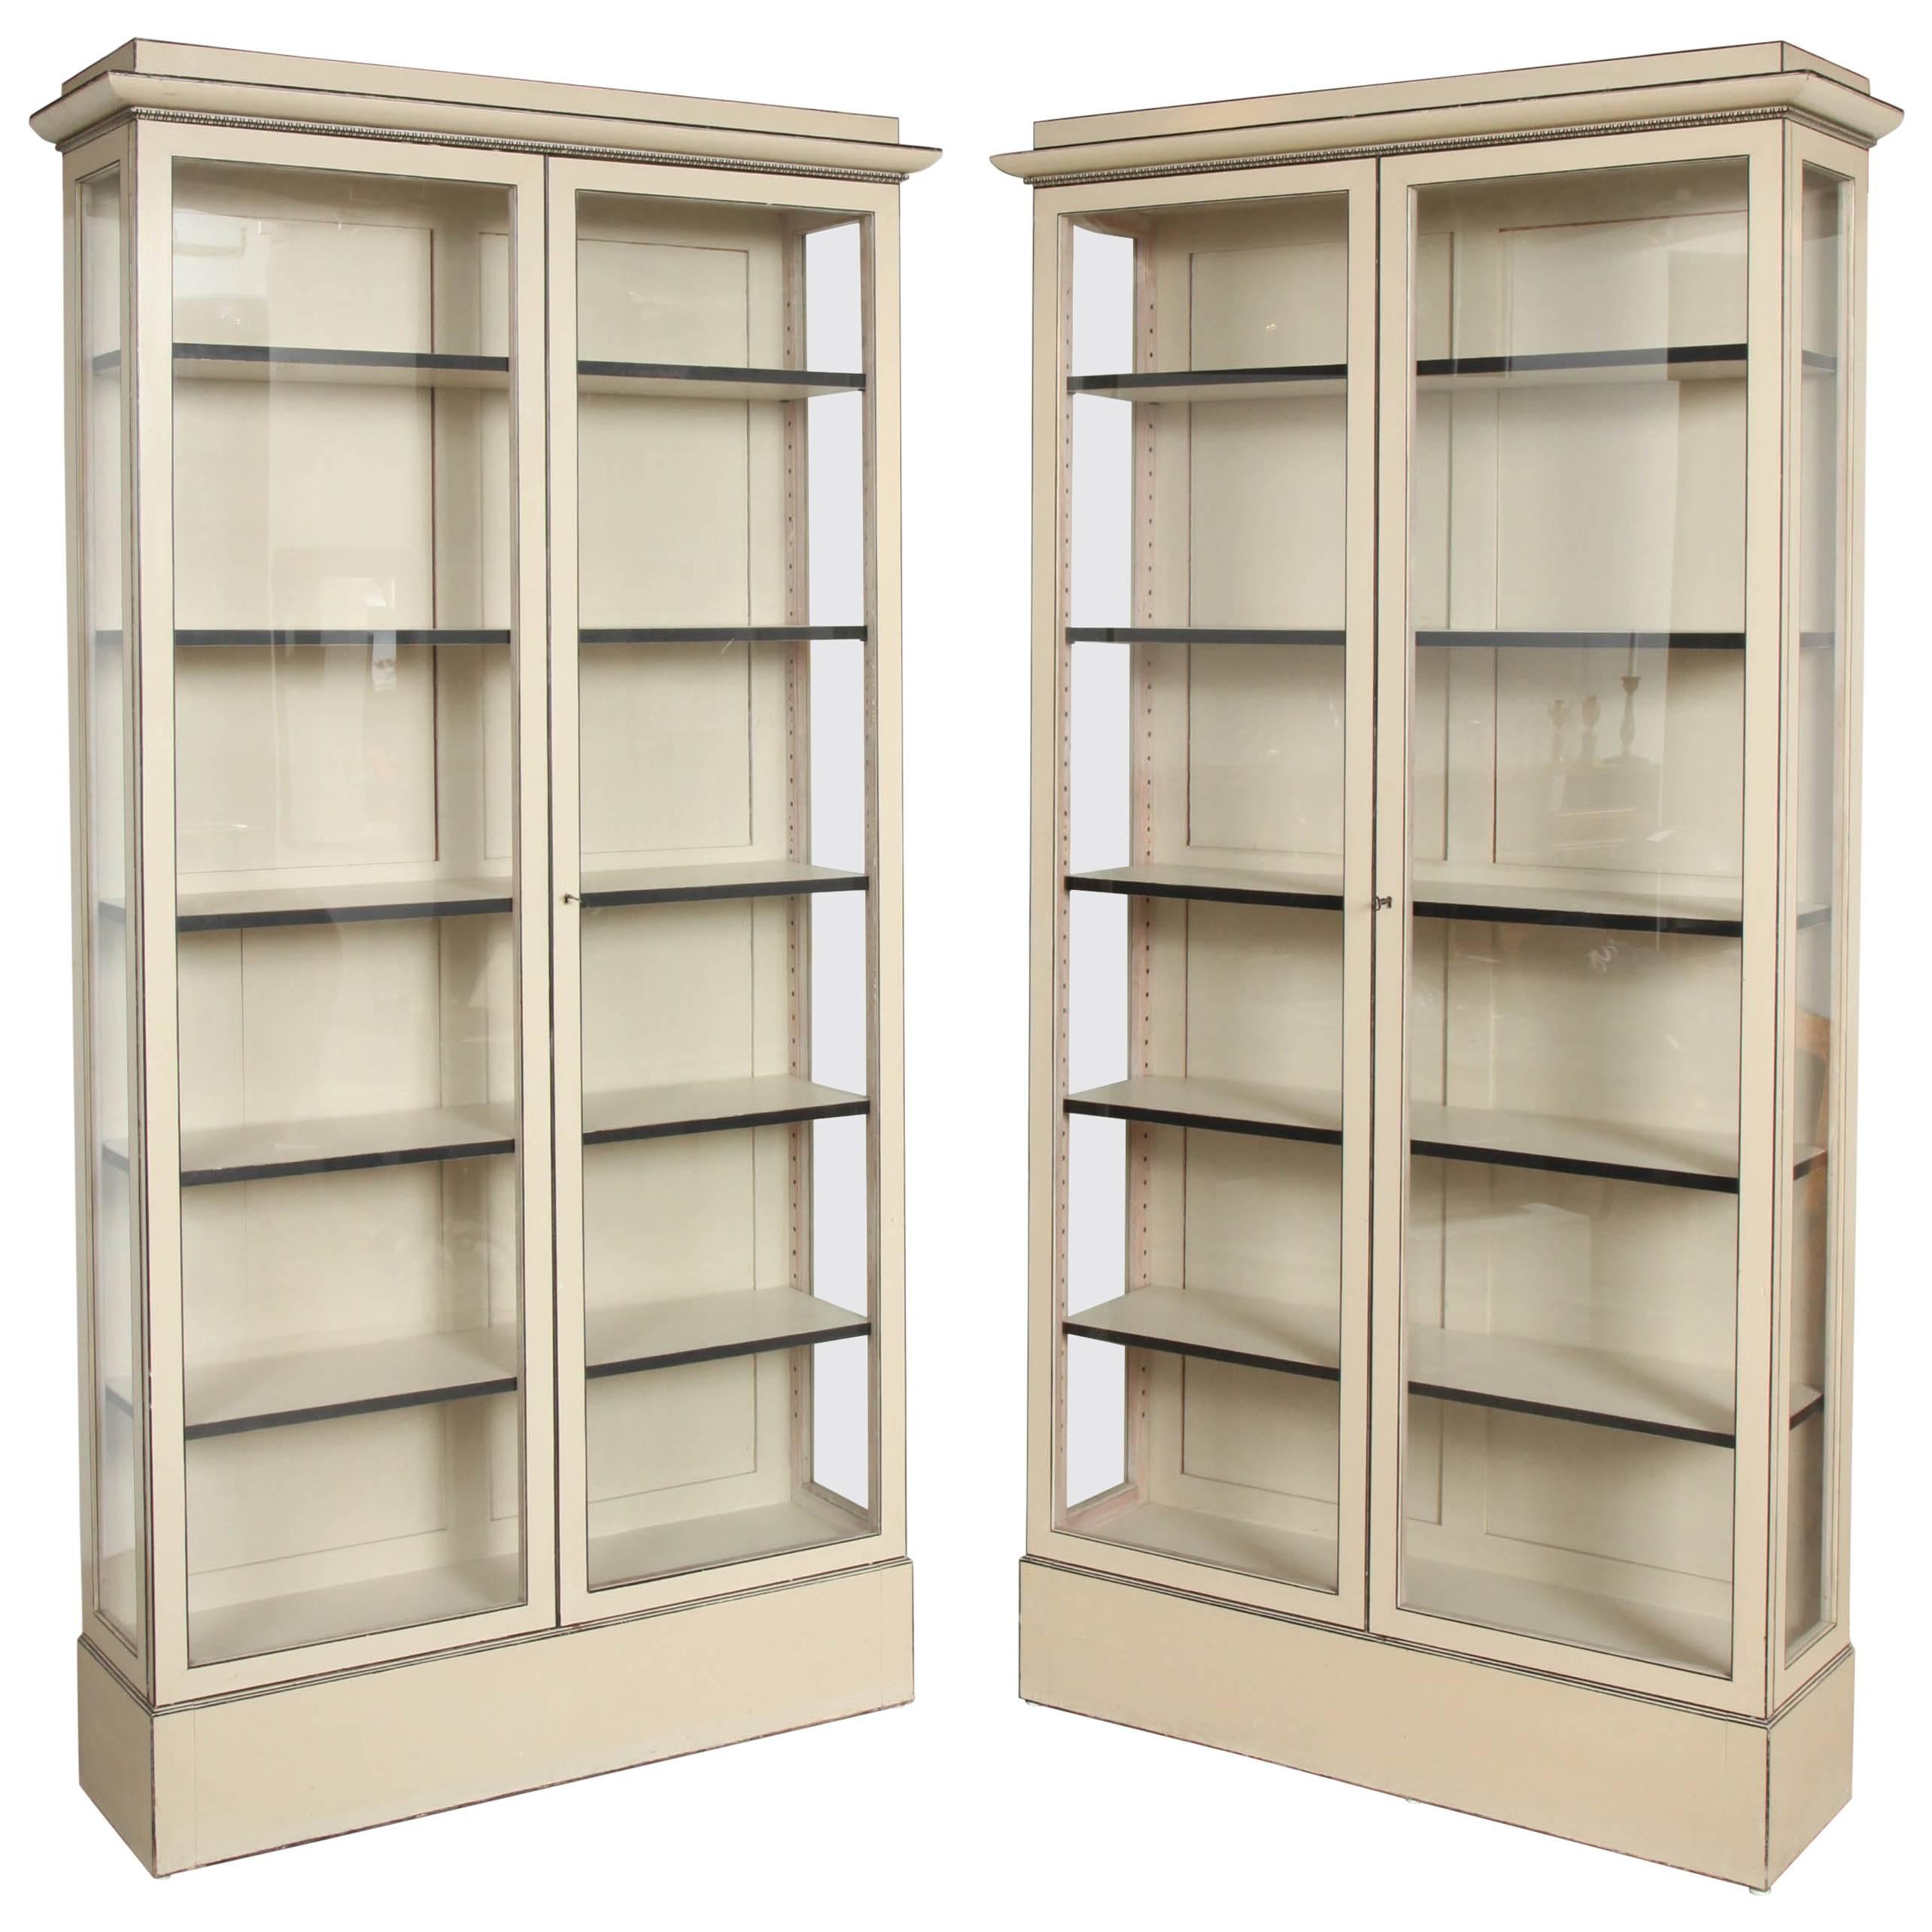 Important Pair of Edvard Thomsen "Nyantik" Cabinets